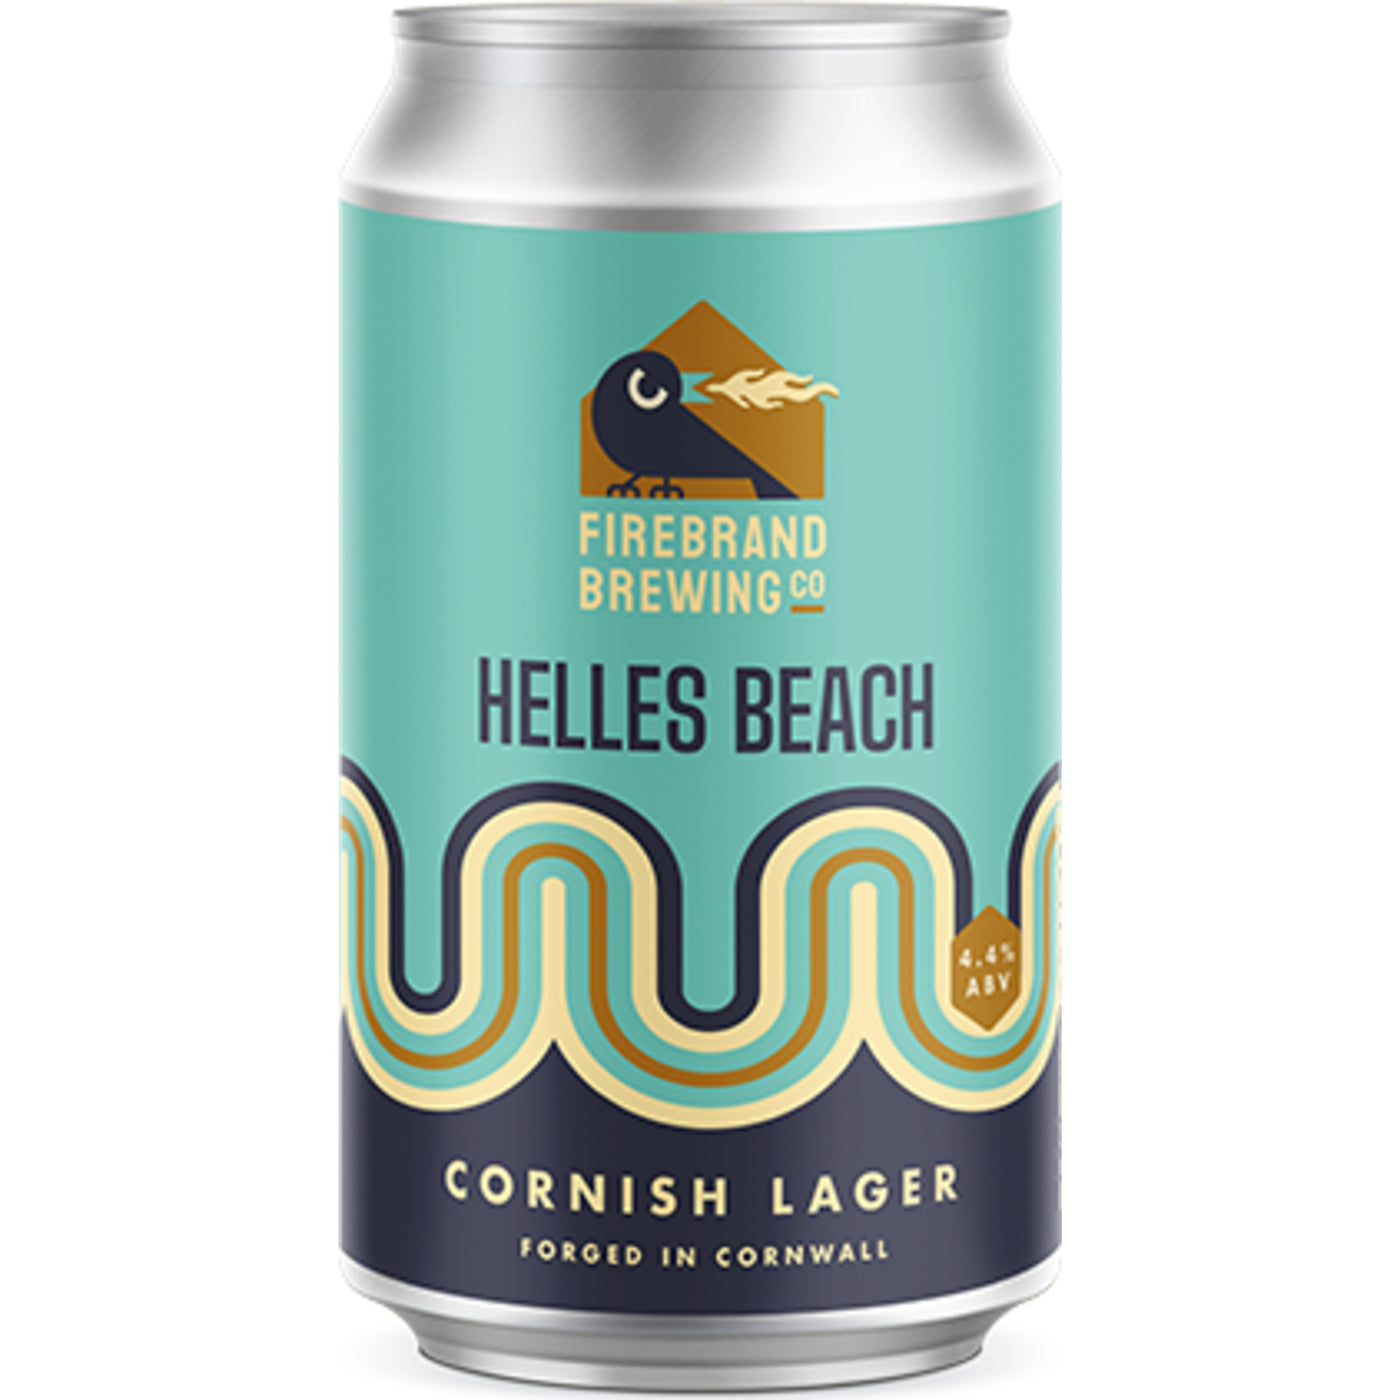 Helles Beach Cornish Lager